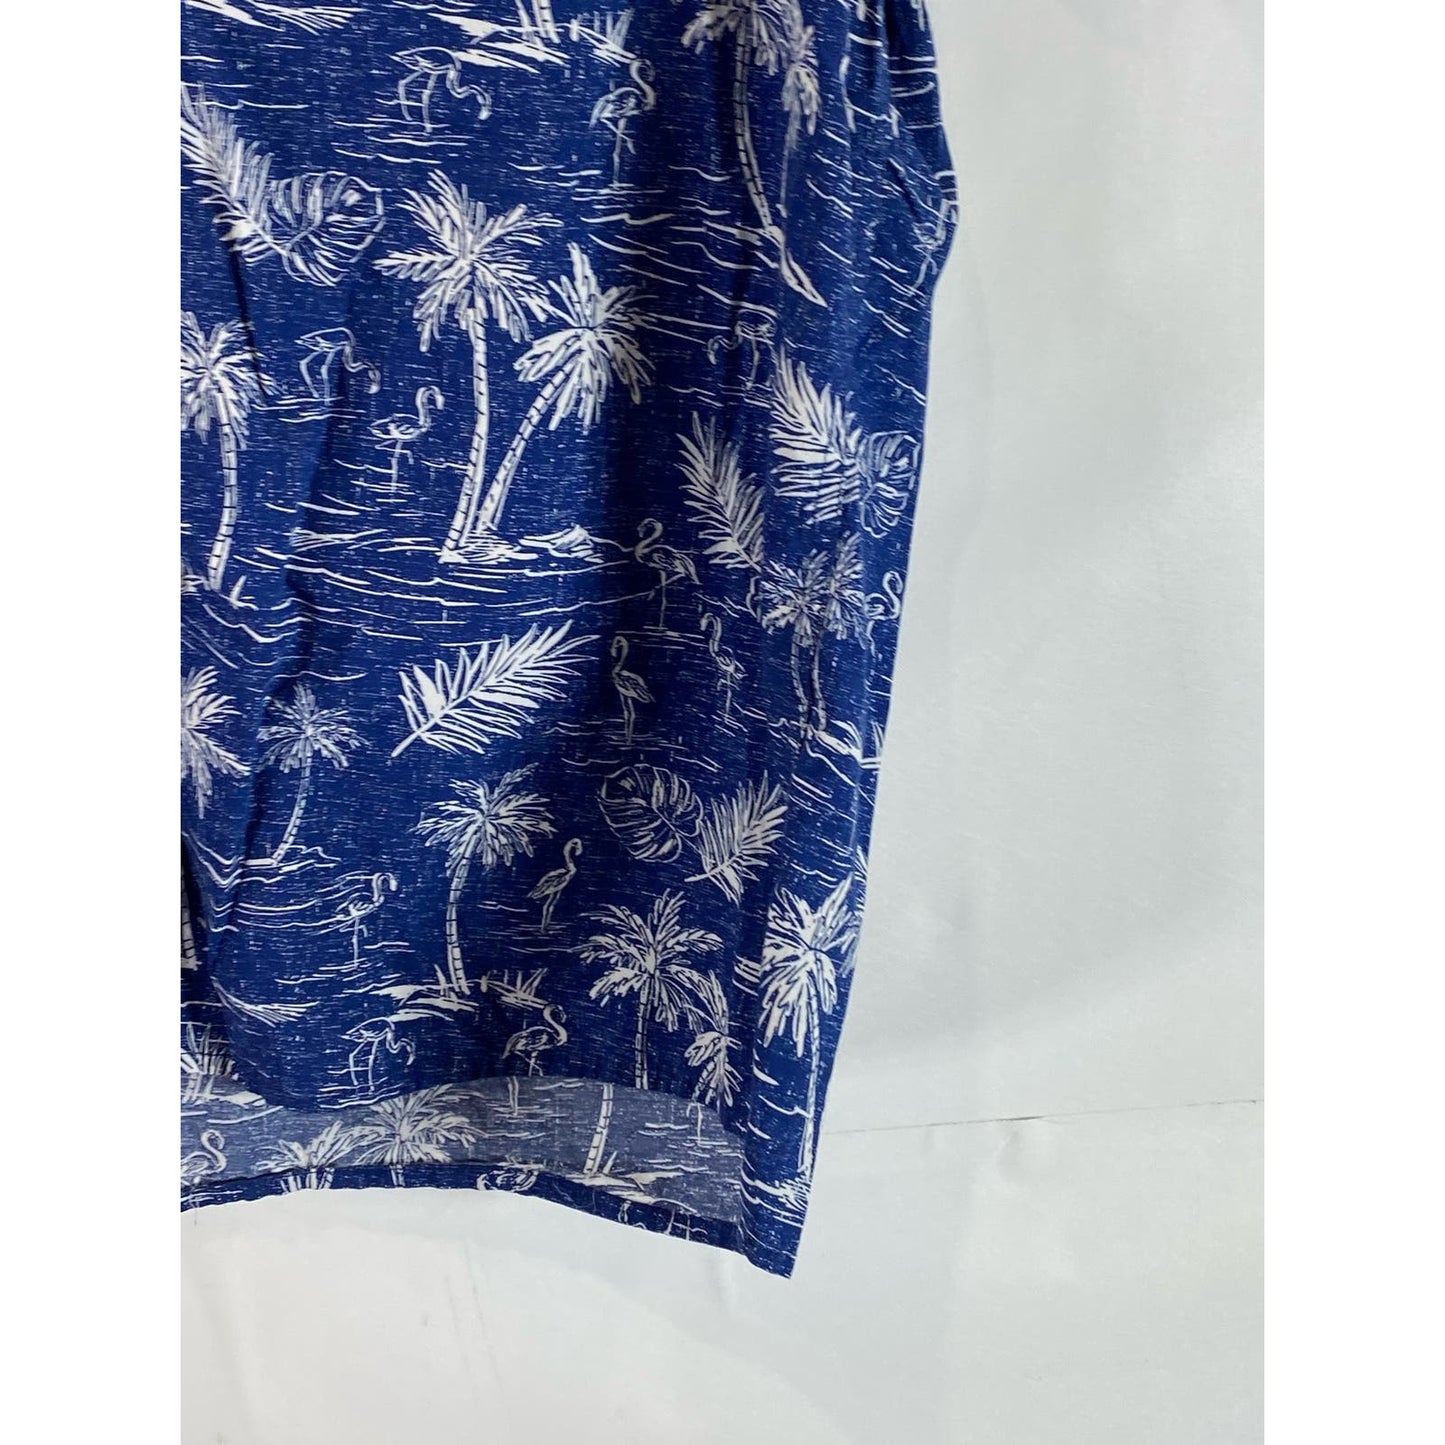 AMERICAN EAGLE Men's Blue Palm Tree Graphic Regular-Fit Button-Up Shirt SZ L